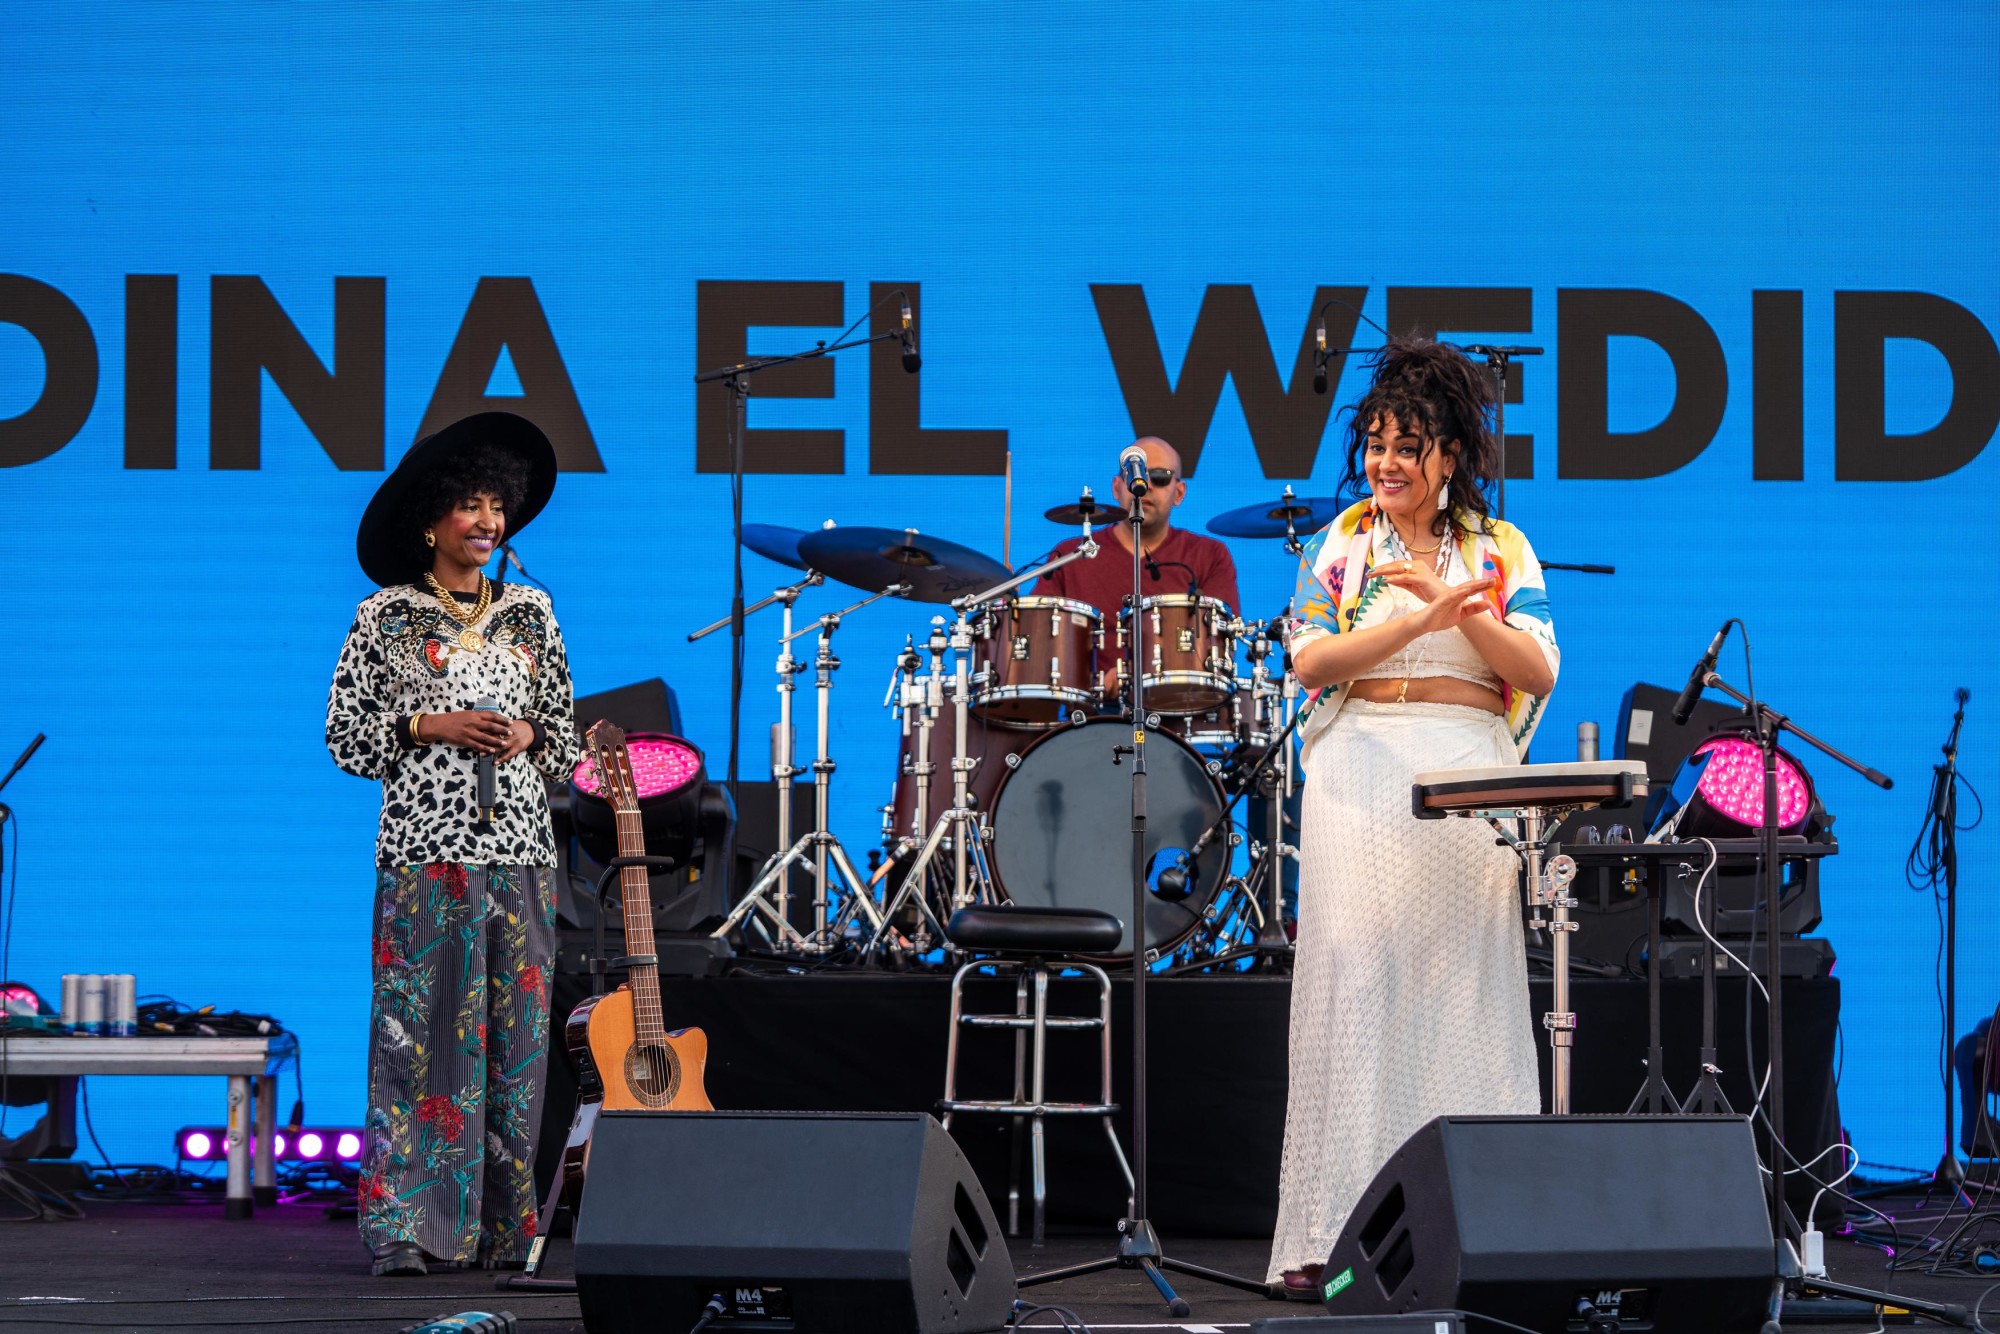 Dina El Wedidi and Alsarah perform during We, The Women Festival at Festival Garden m60061